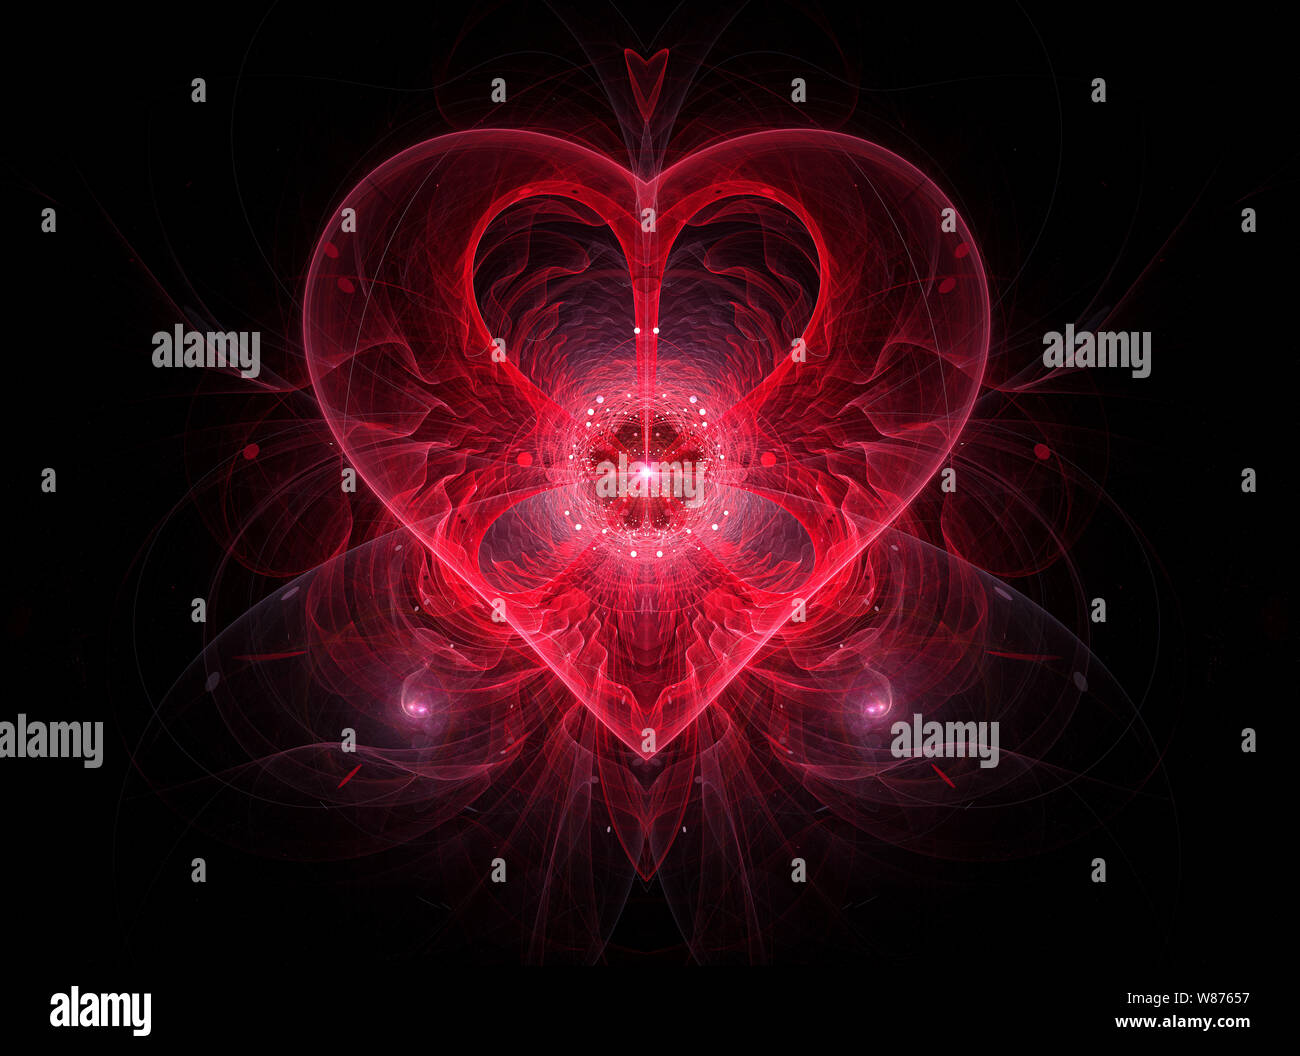 Fractal Art Background - Neon Heart - 3D Rendering Stock Photo - Alamy